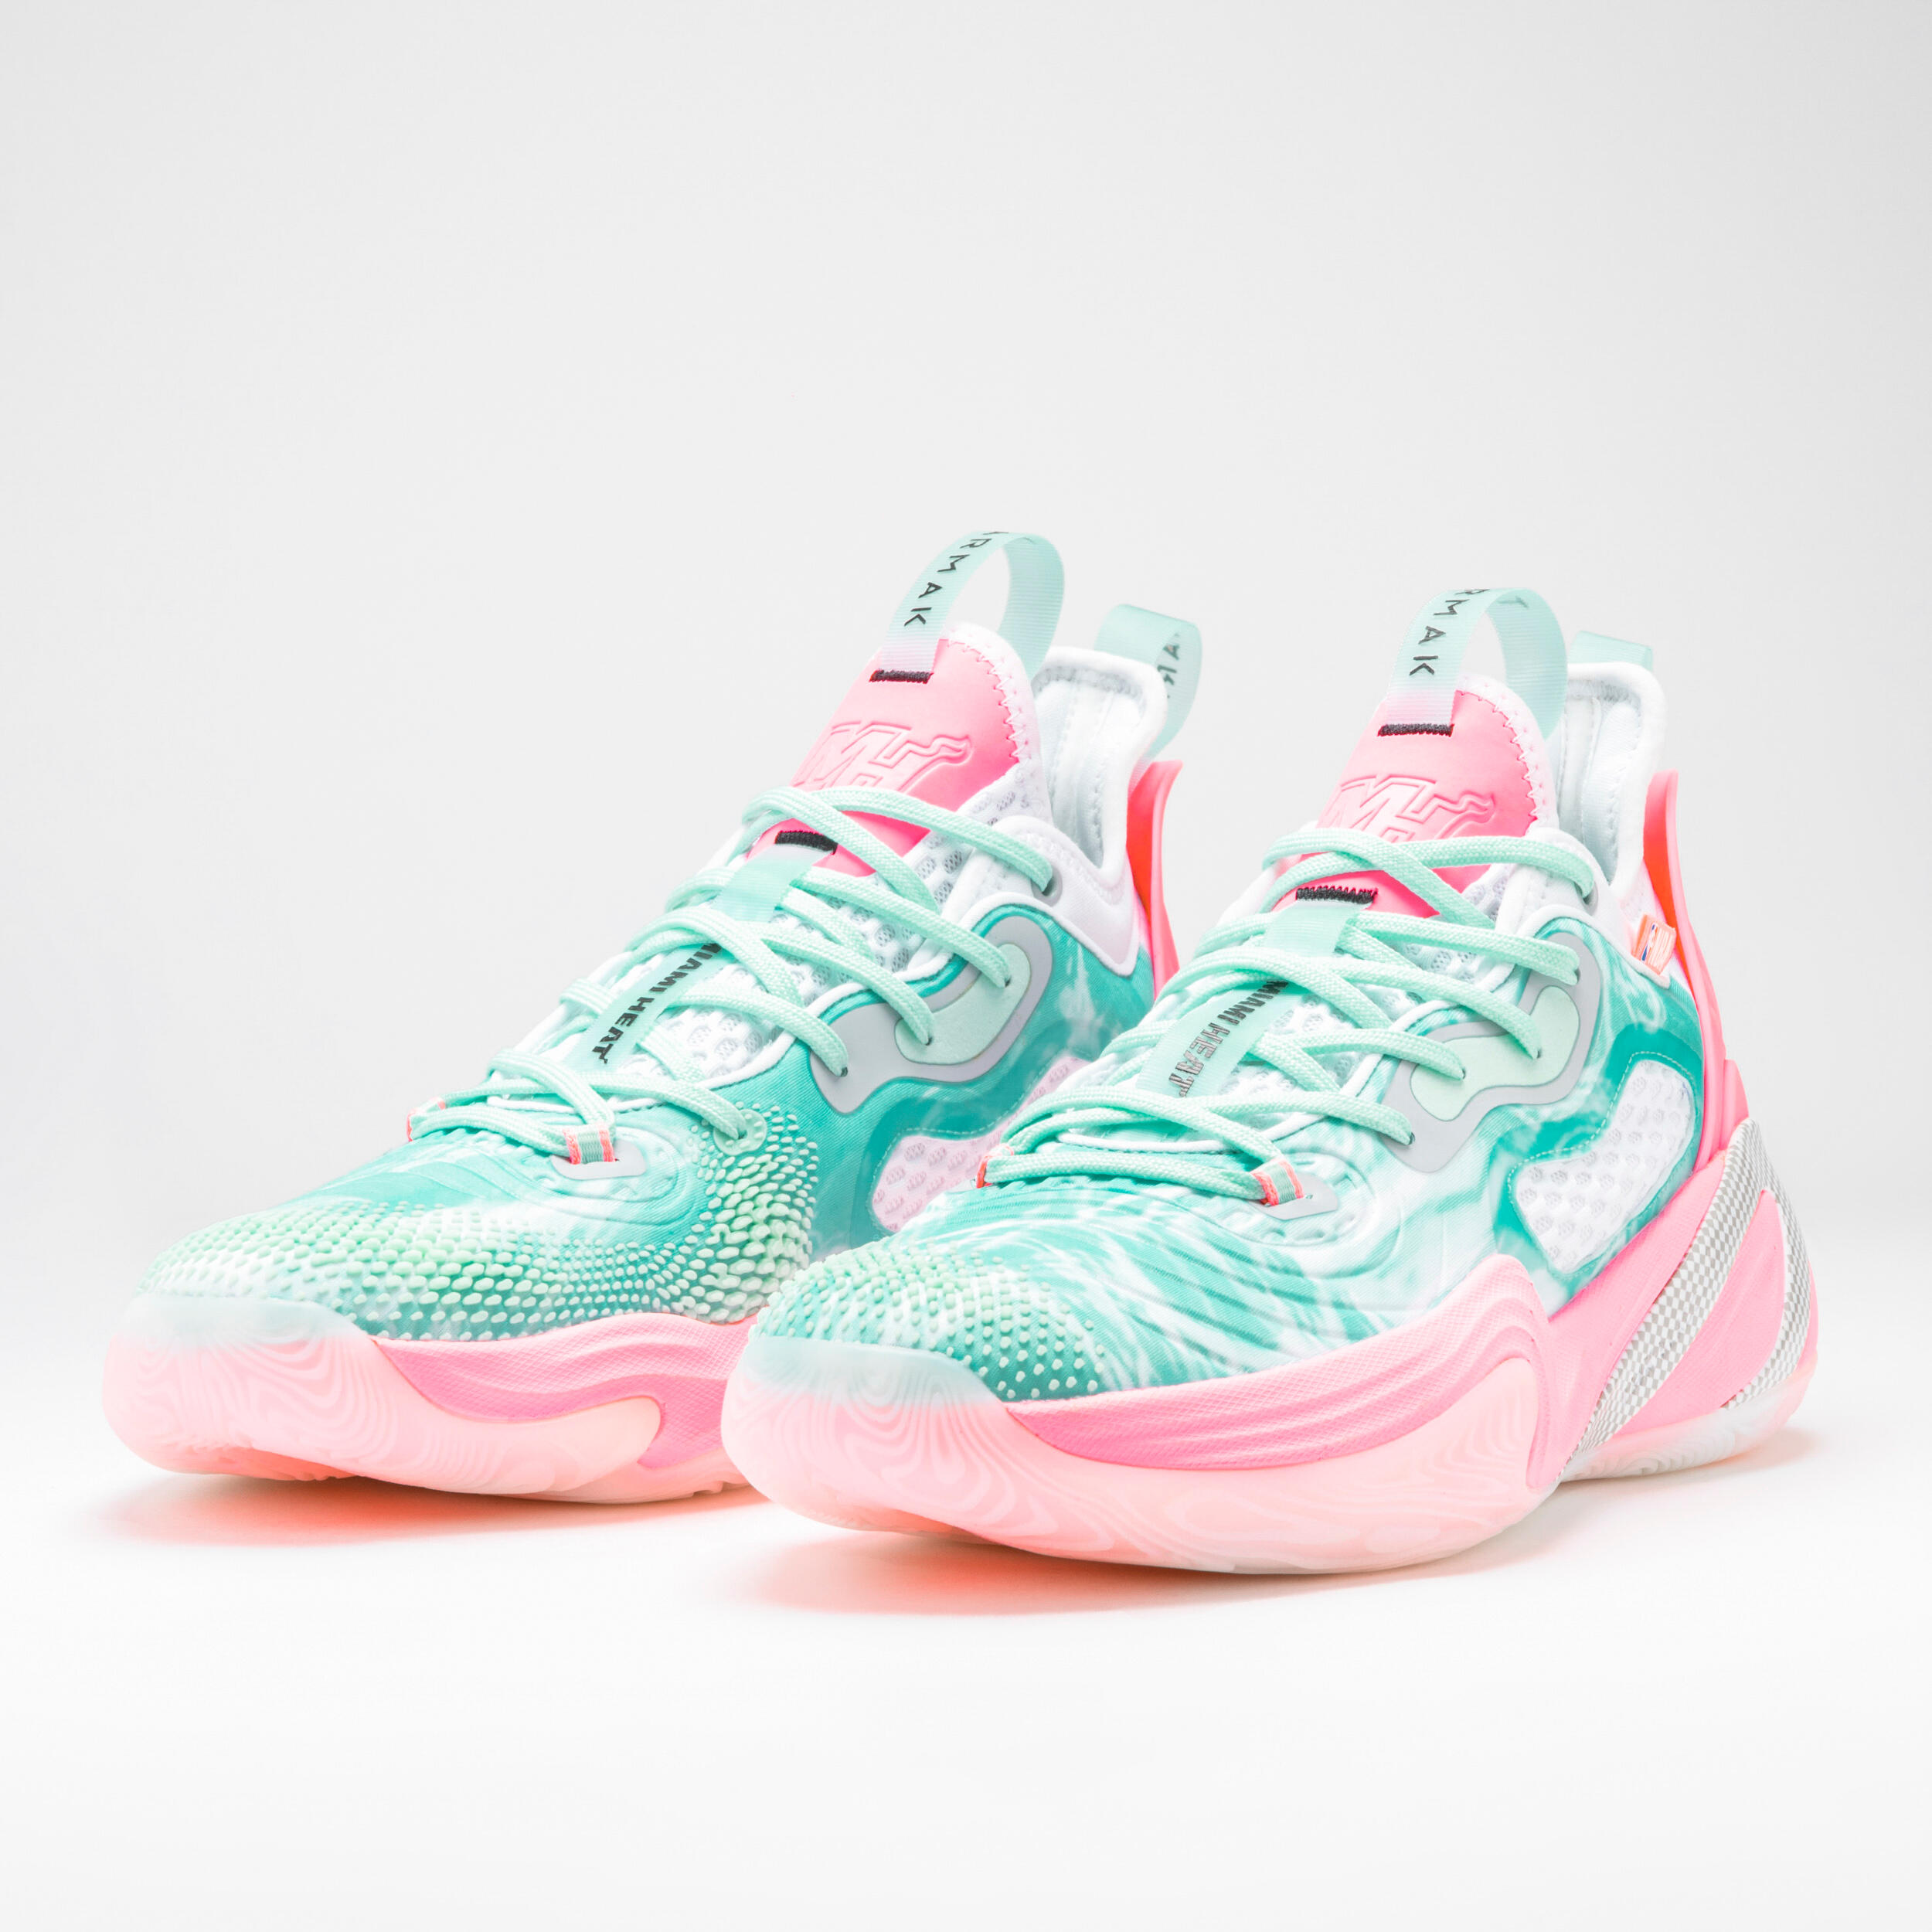 Men's/Women's Basketball Shoes SE900 - NBA Miami Heat/Green/Pink 2/9